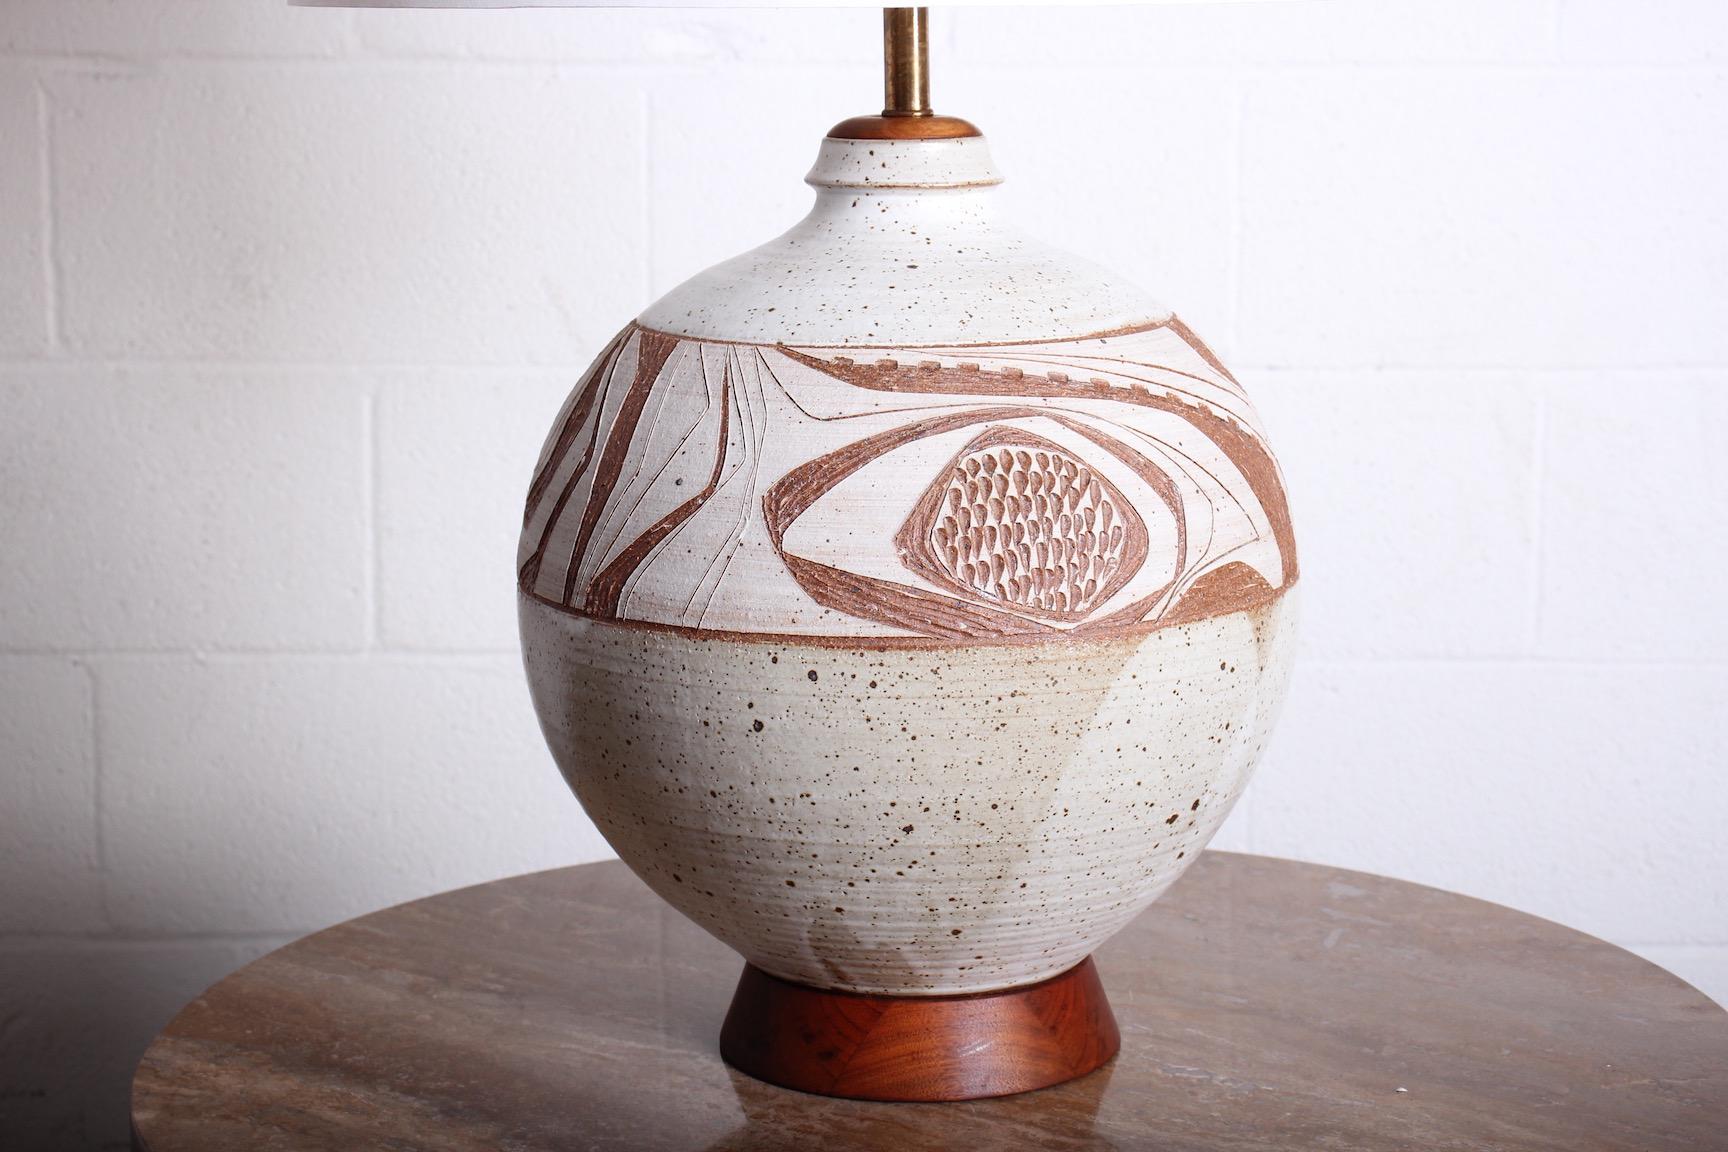 A large and impressive ceramic lamp by California craftsman Joel Edwards. 

Ceramic measures: 12